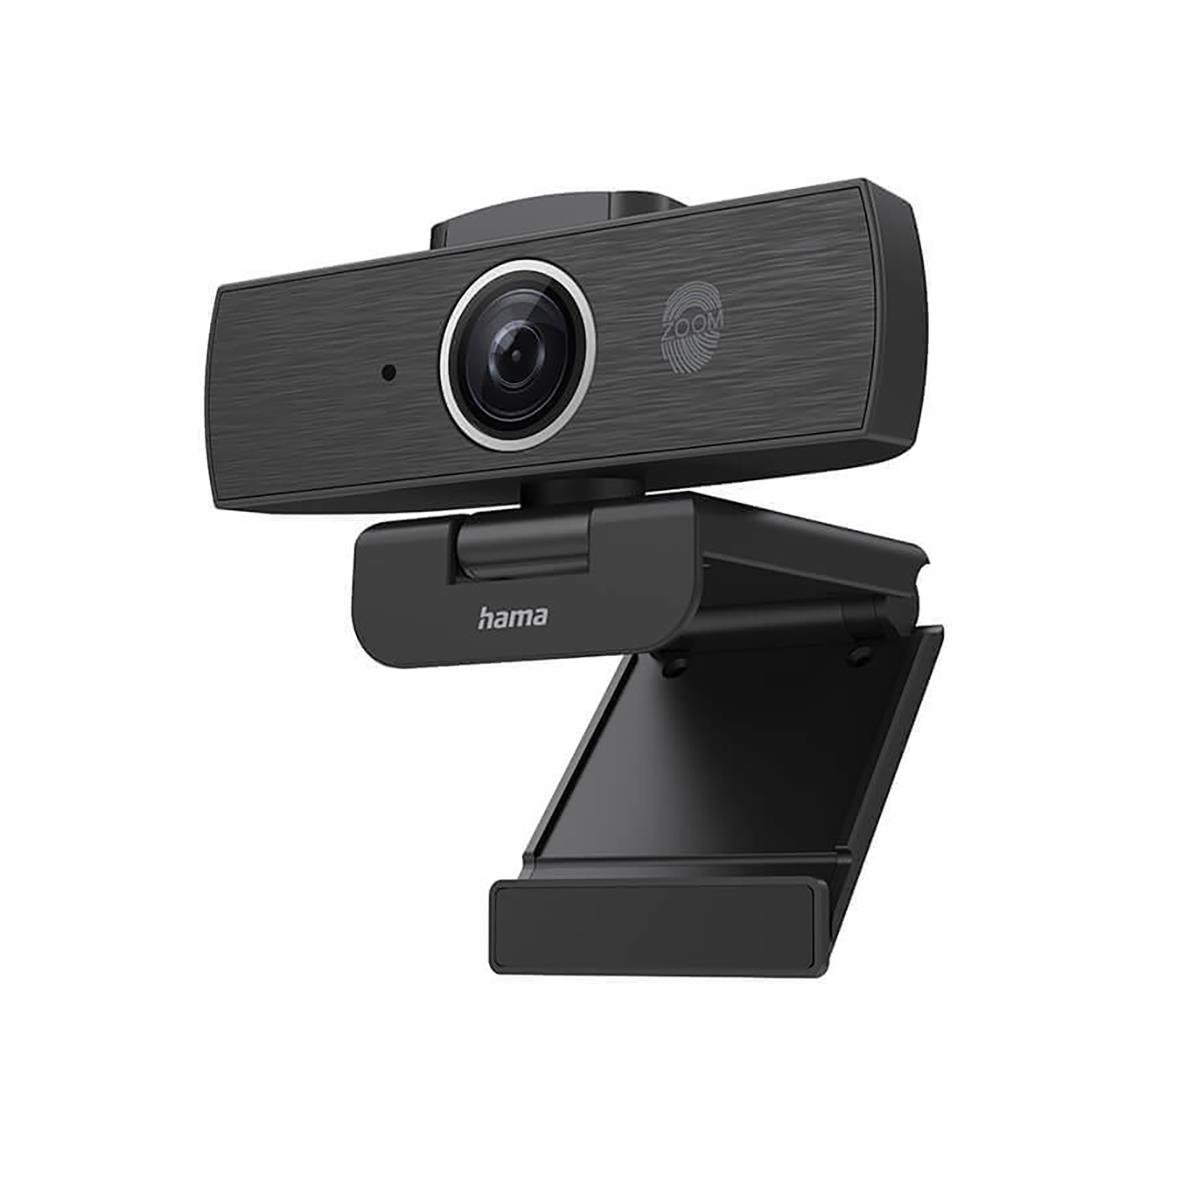 Webbkamera Hama C-900 Pro 216p